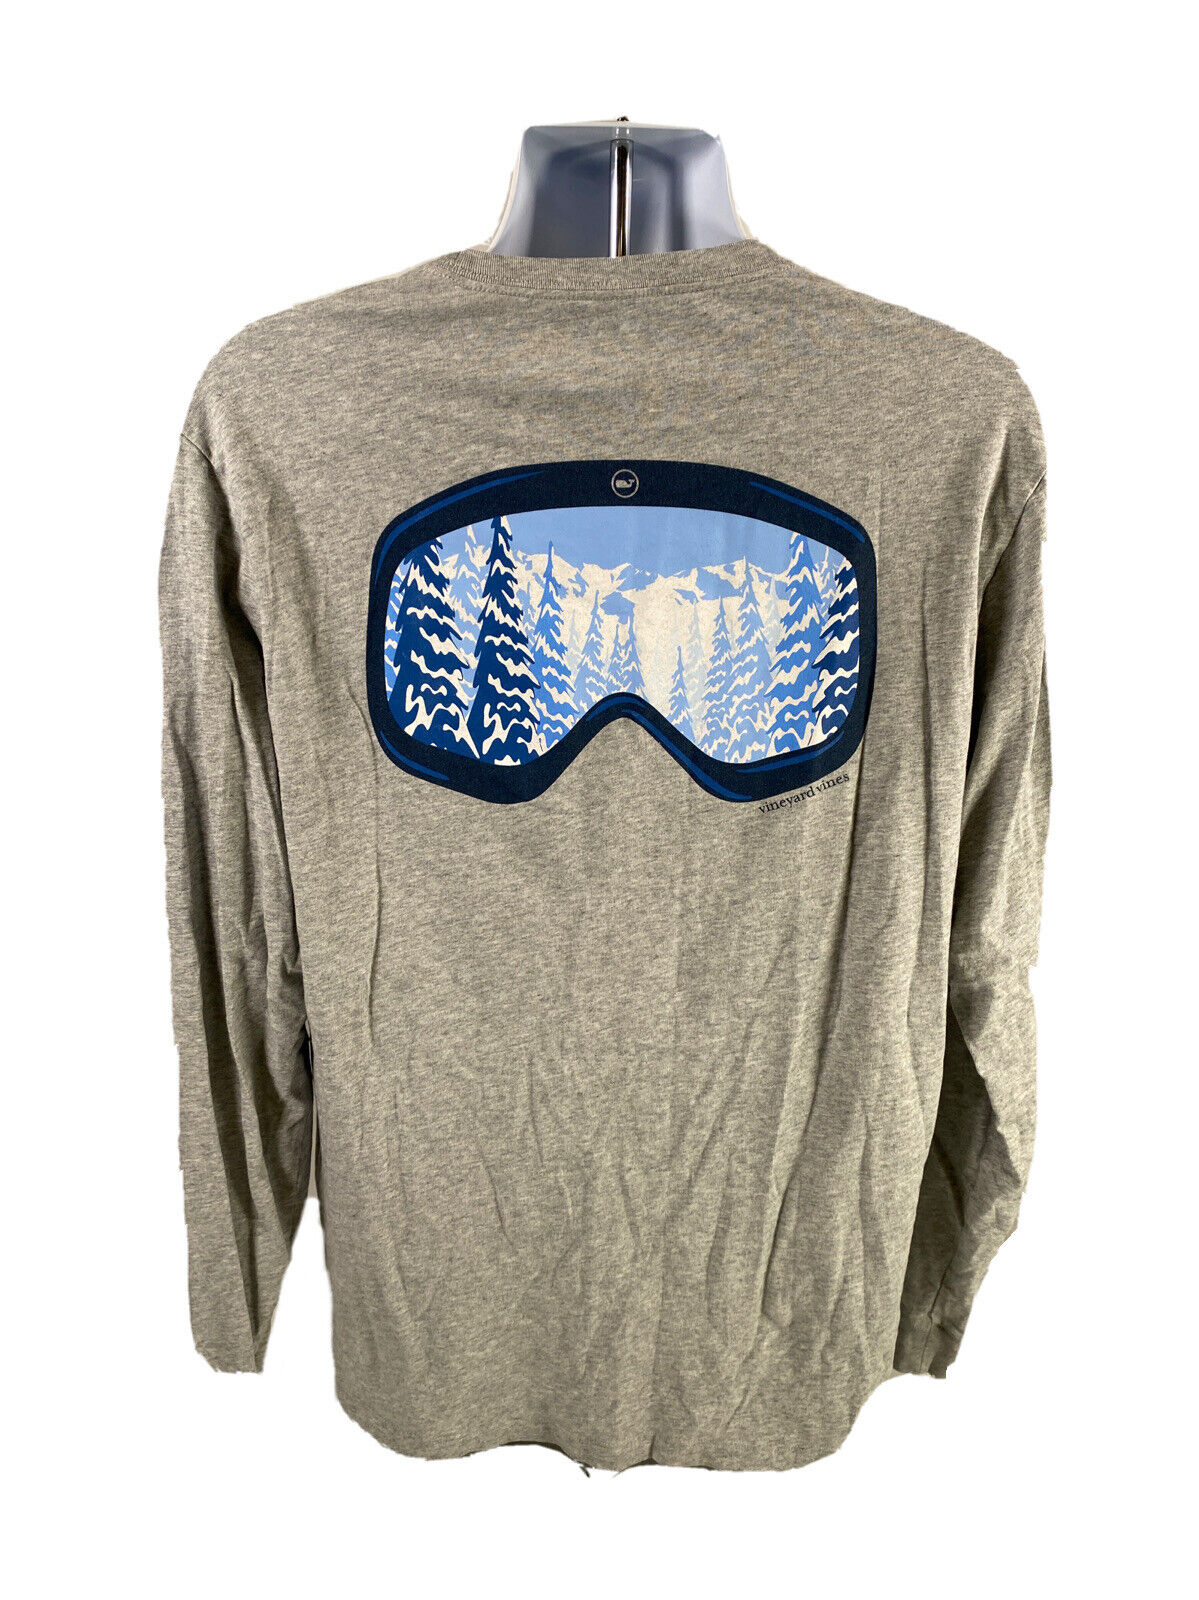 Vineyard Vines Men's Gray Snow Goggle Graphic Long Sleeve T-Shirt - L